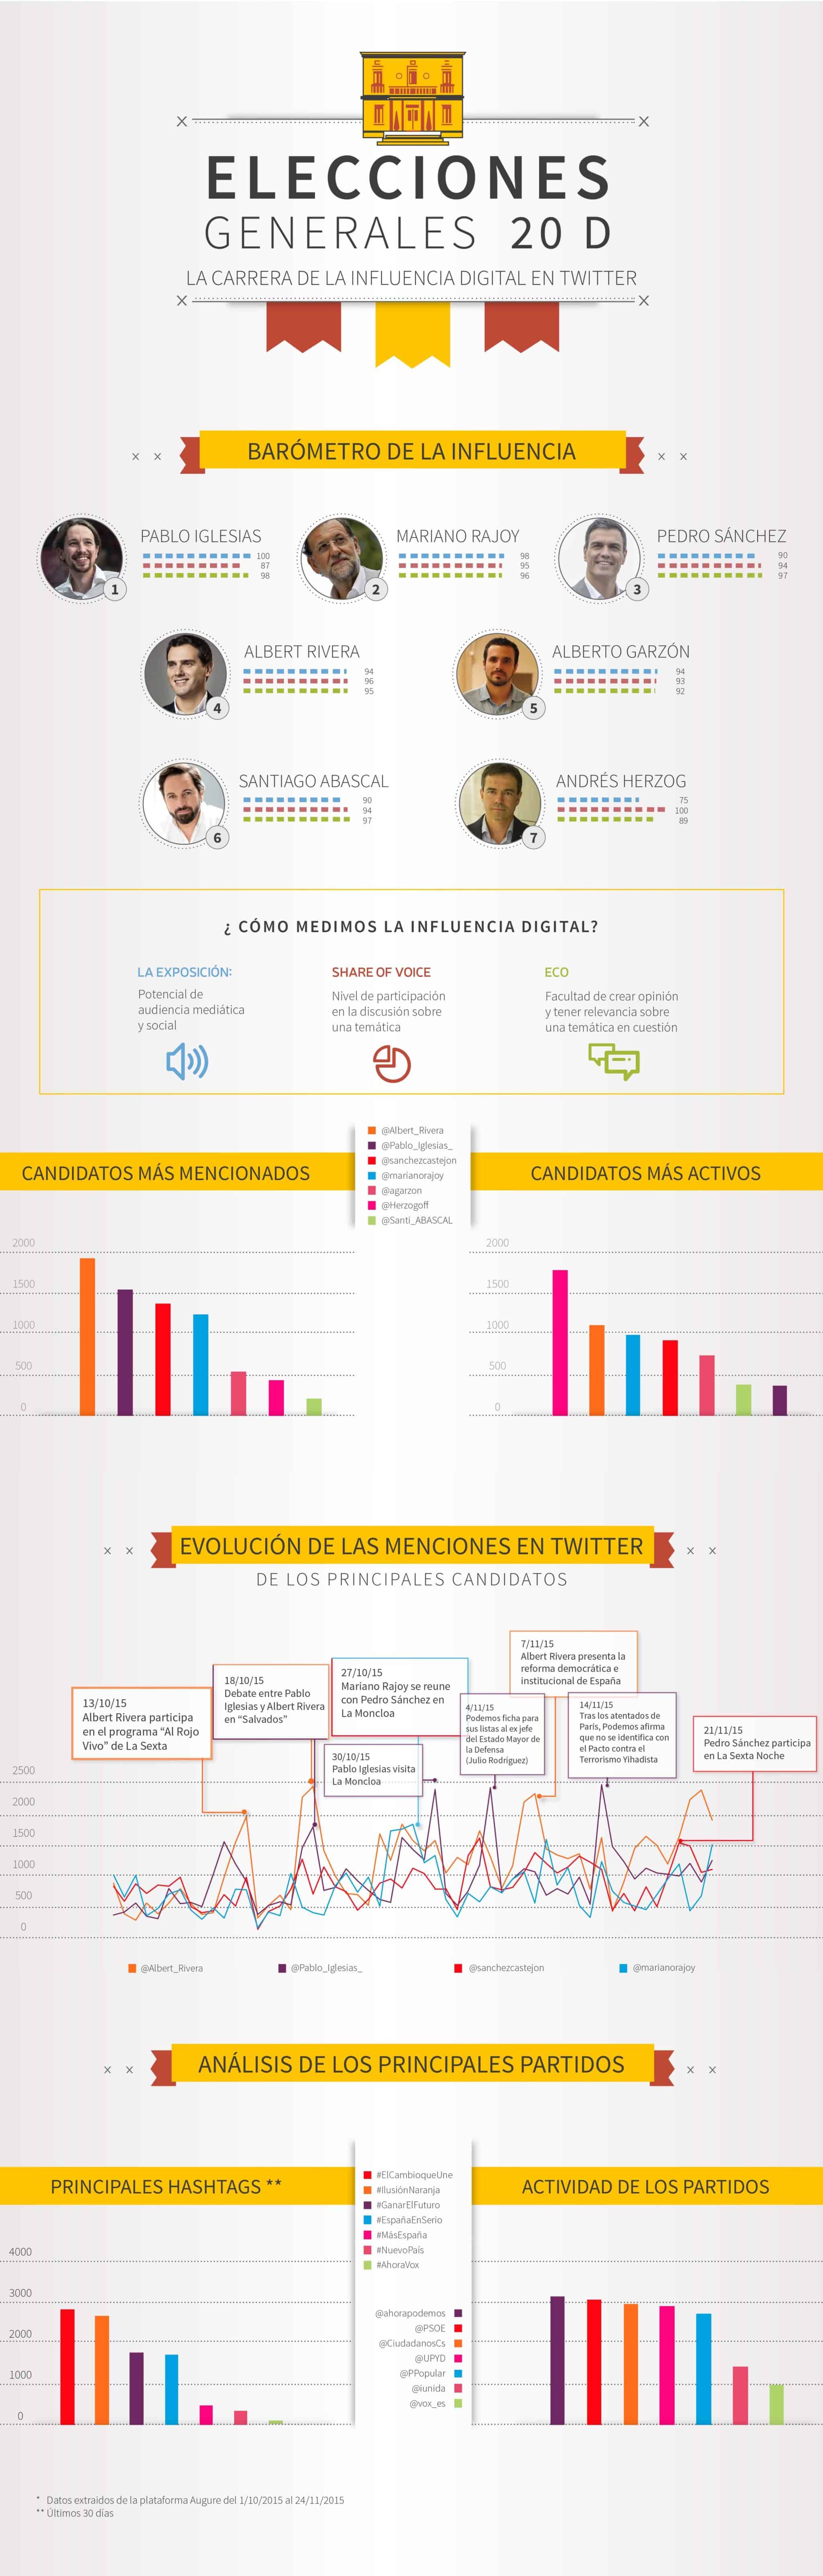 Elecciones-Generales-Spain-2015-Launchmetrics-influencia-digital